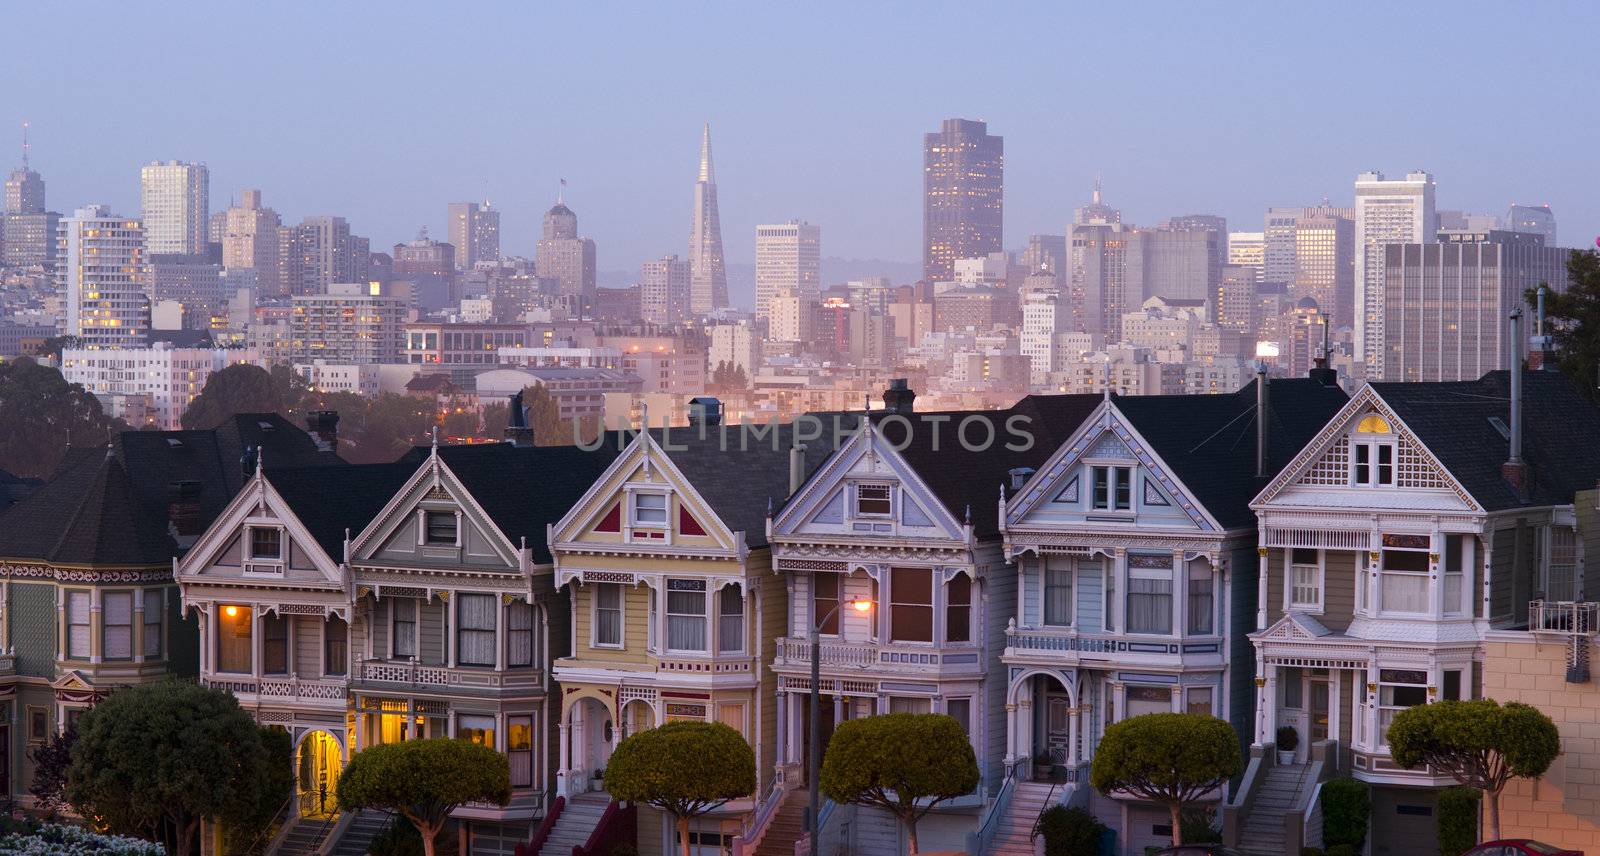 San Francisco and the Neighborhood panoramic style